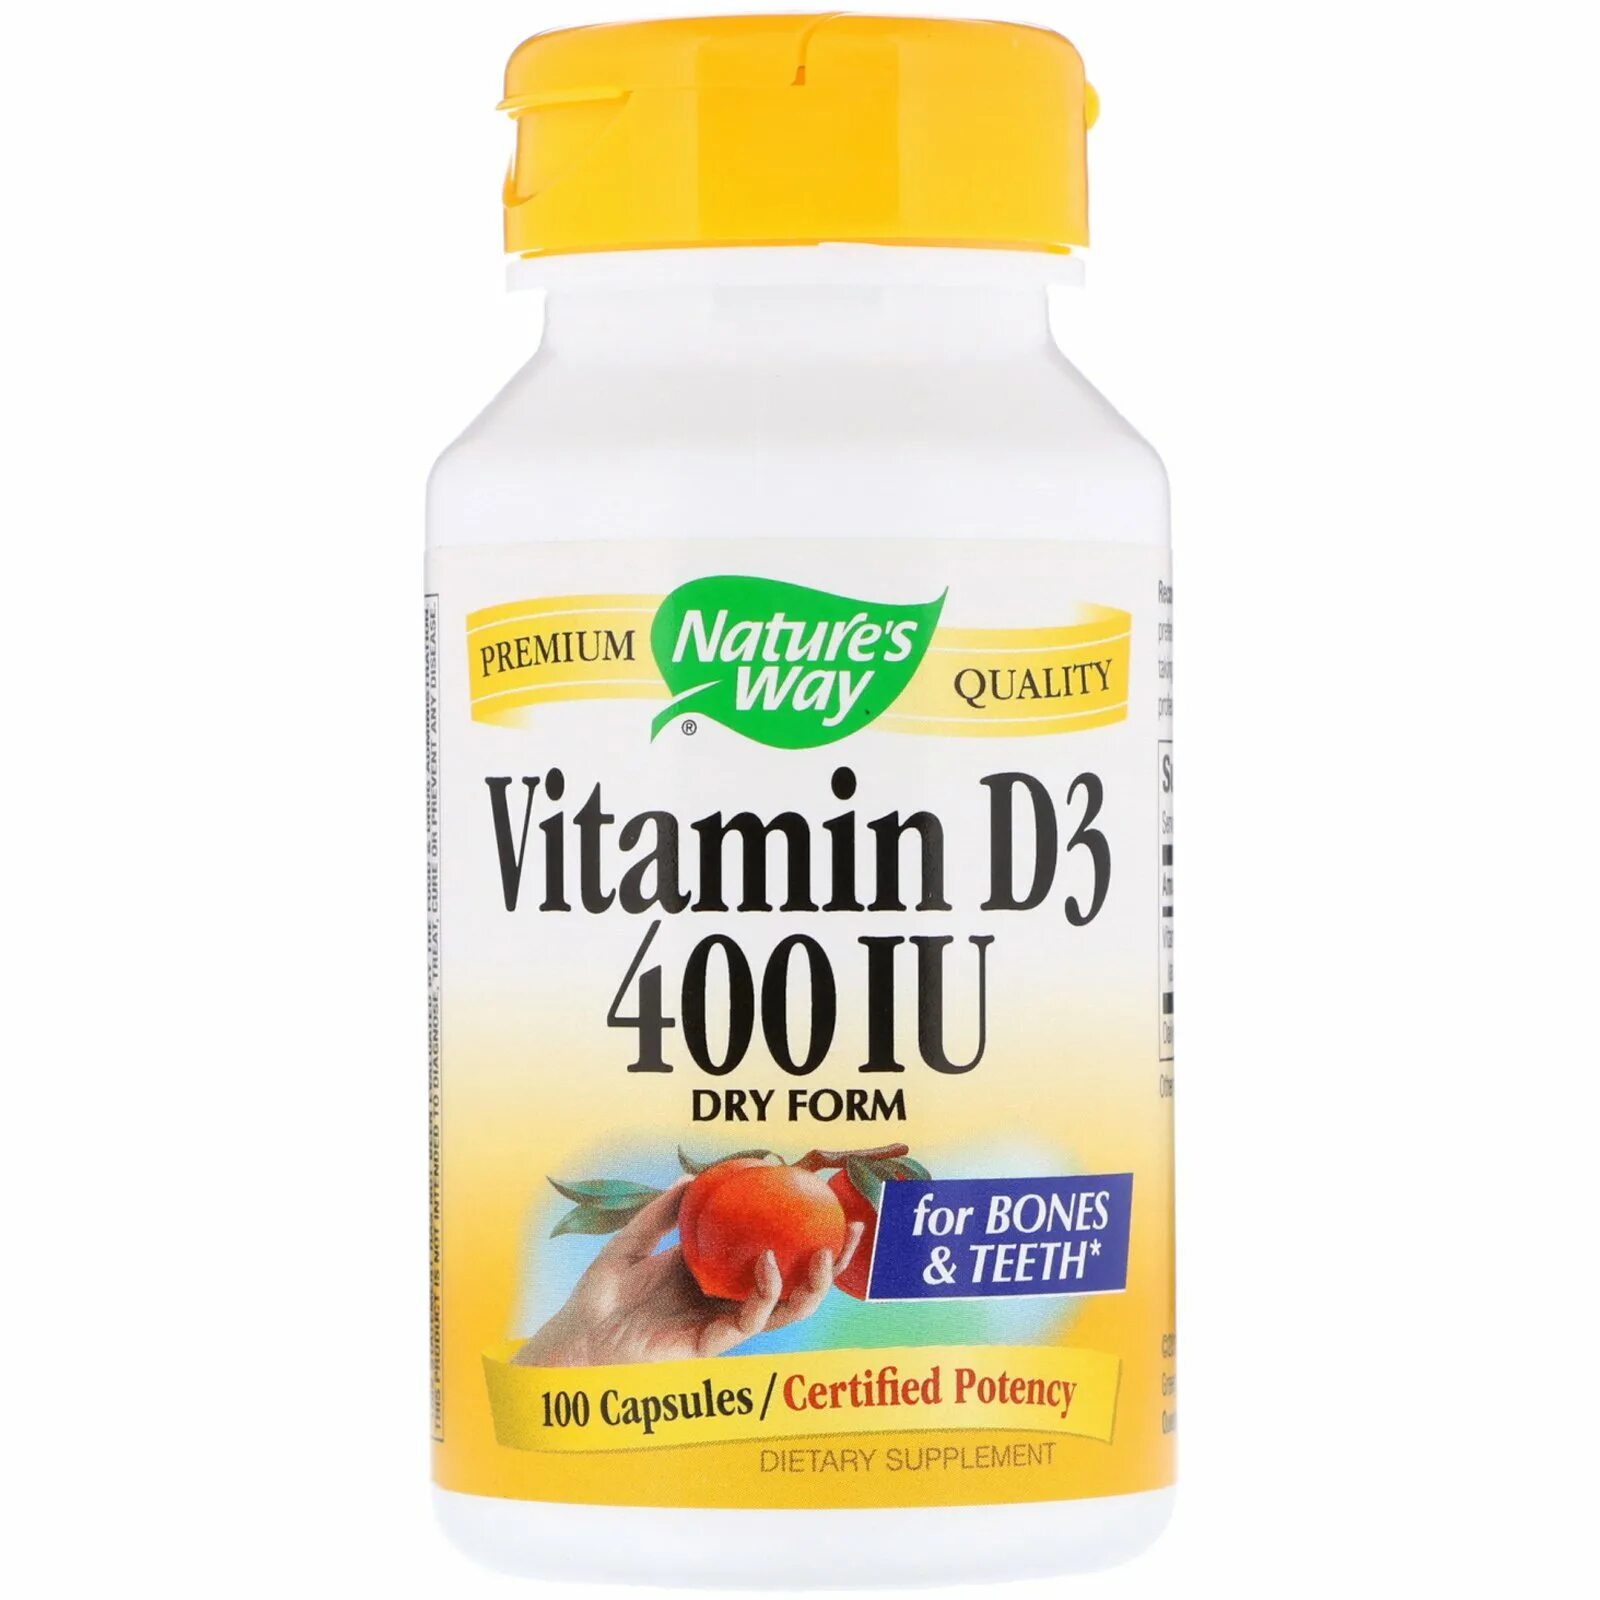 Vitamins potency. Цинк Хелат натурес Вэй. Optimum System Vitamin d3 (6000 IU) 365 капсул. Железо Хелат НСП. Селен 200 мкг.